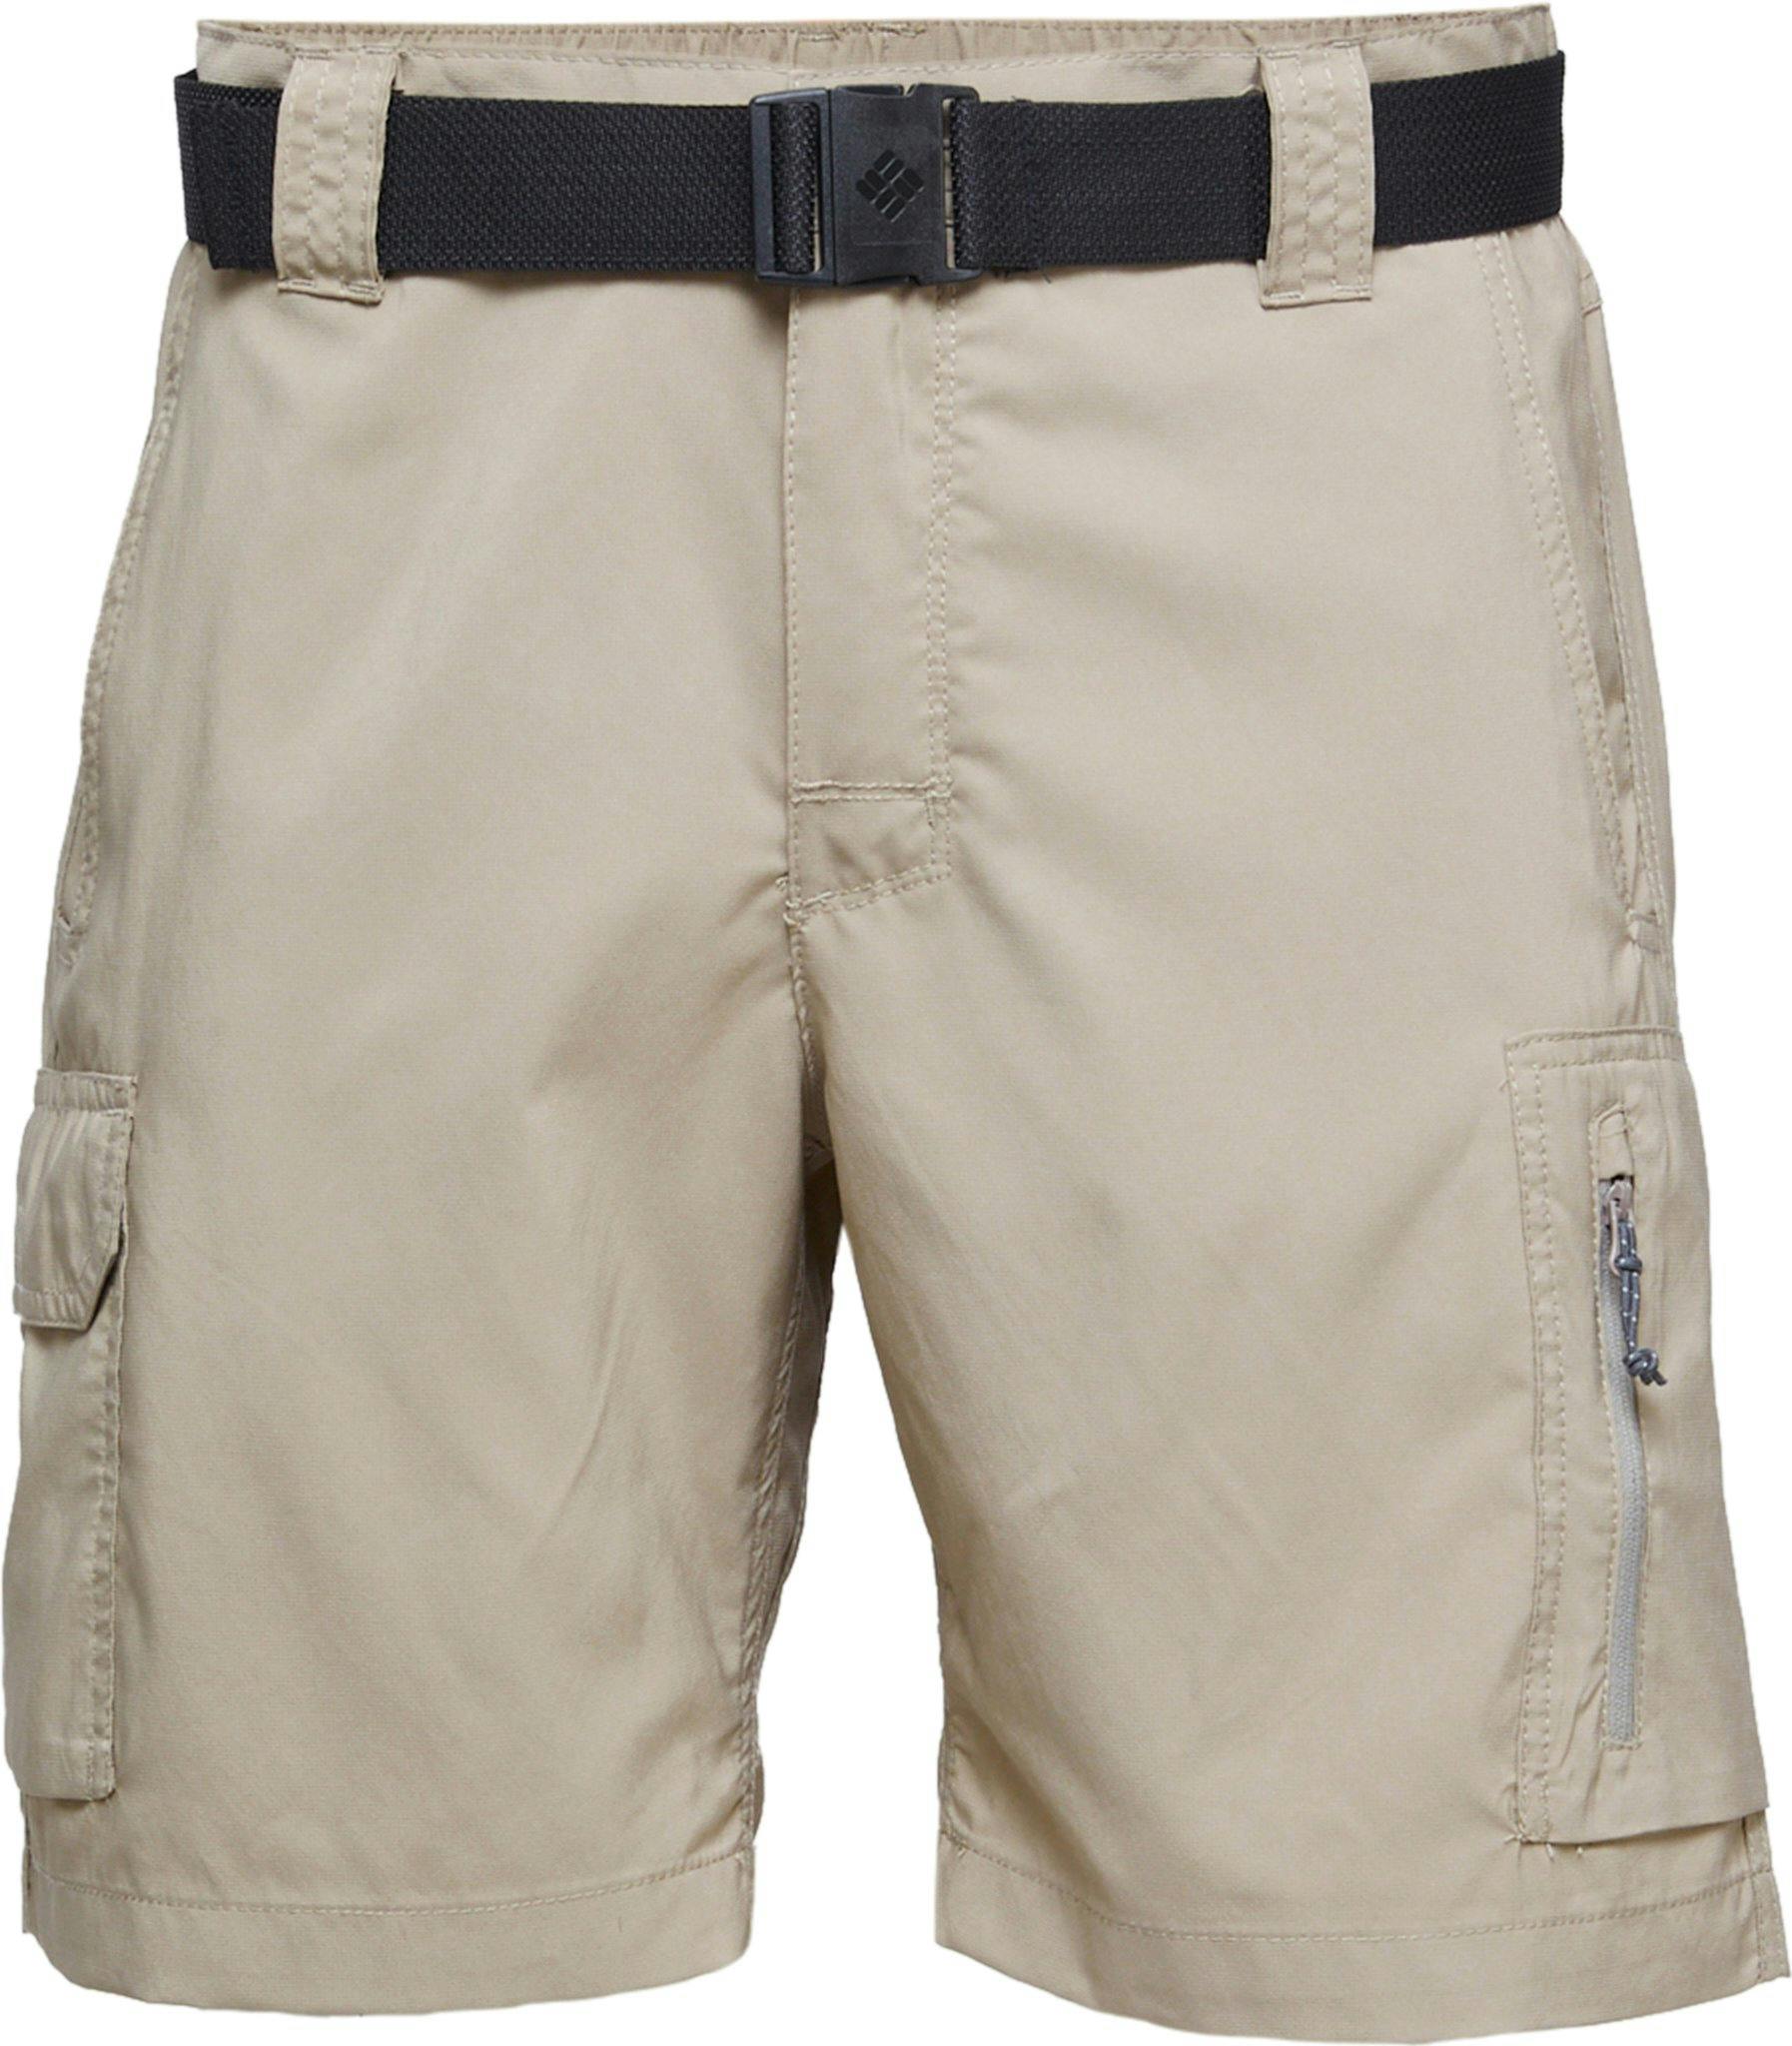 Product image for Silver Ridge™ Utility Cargo Shorts - Men's